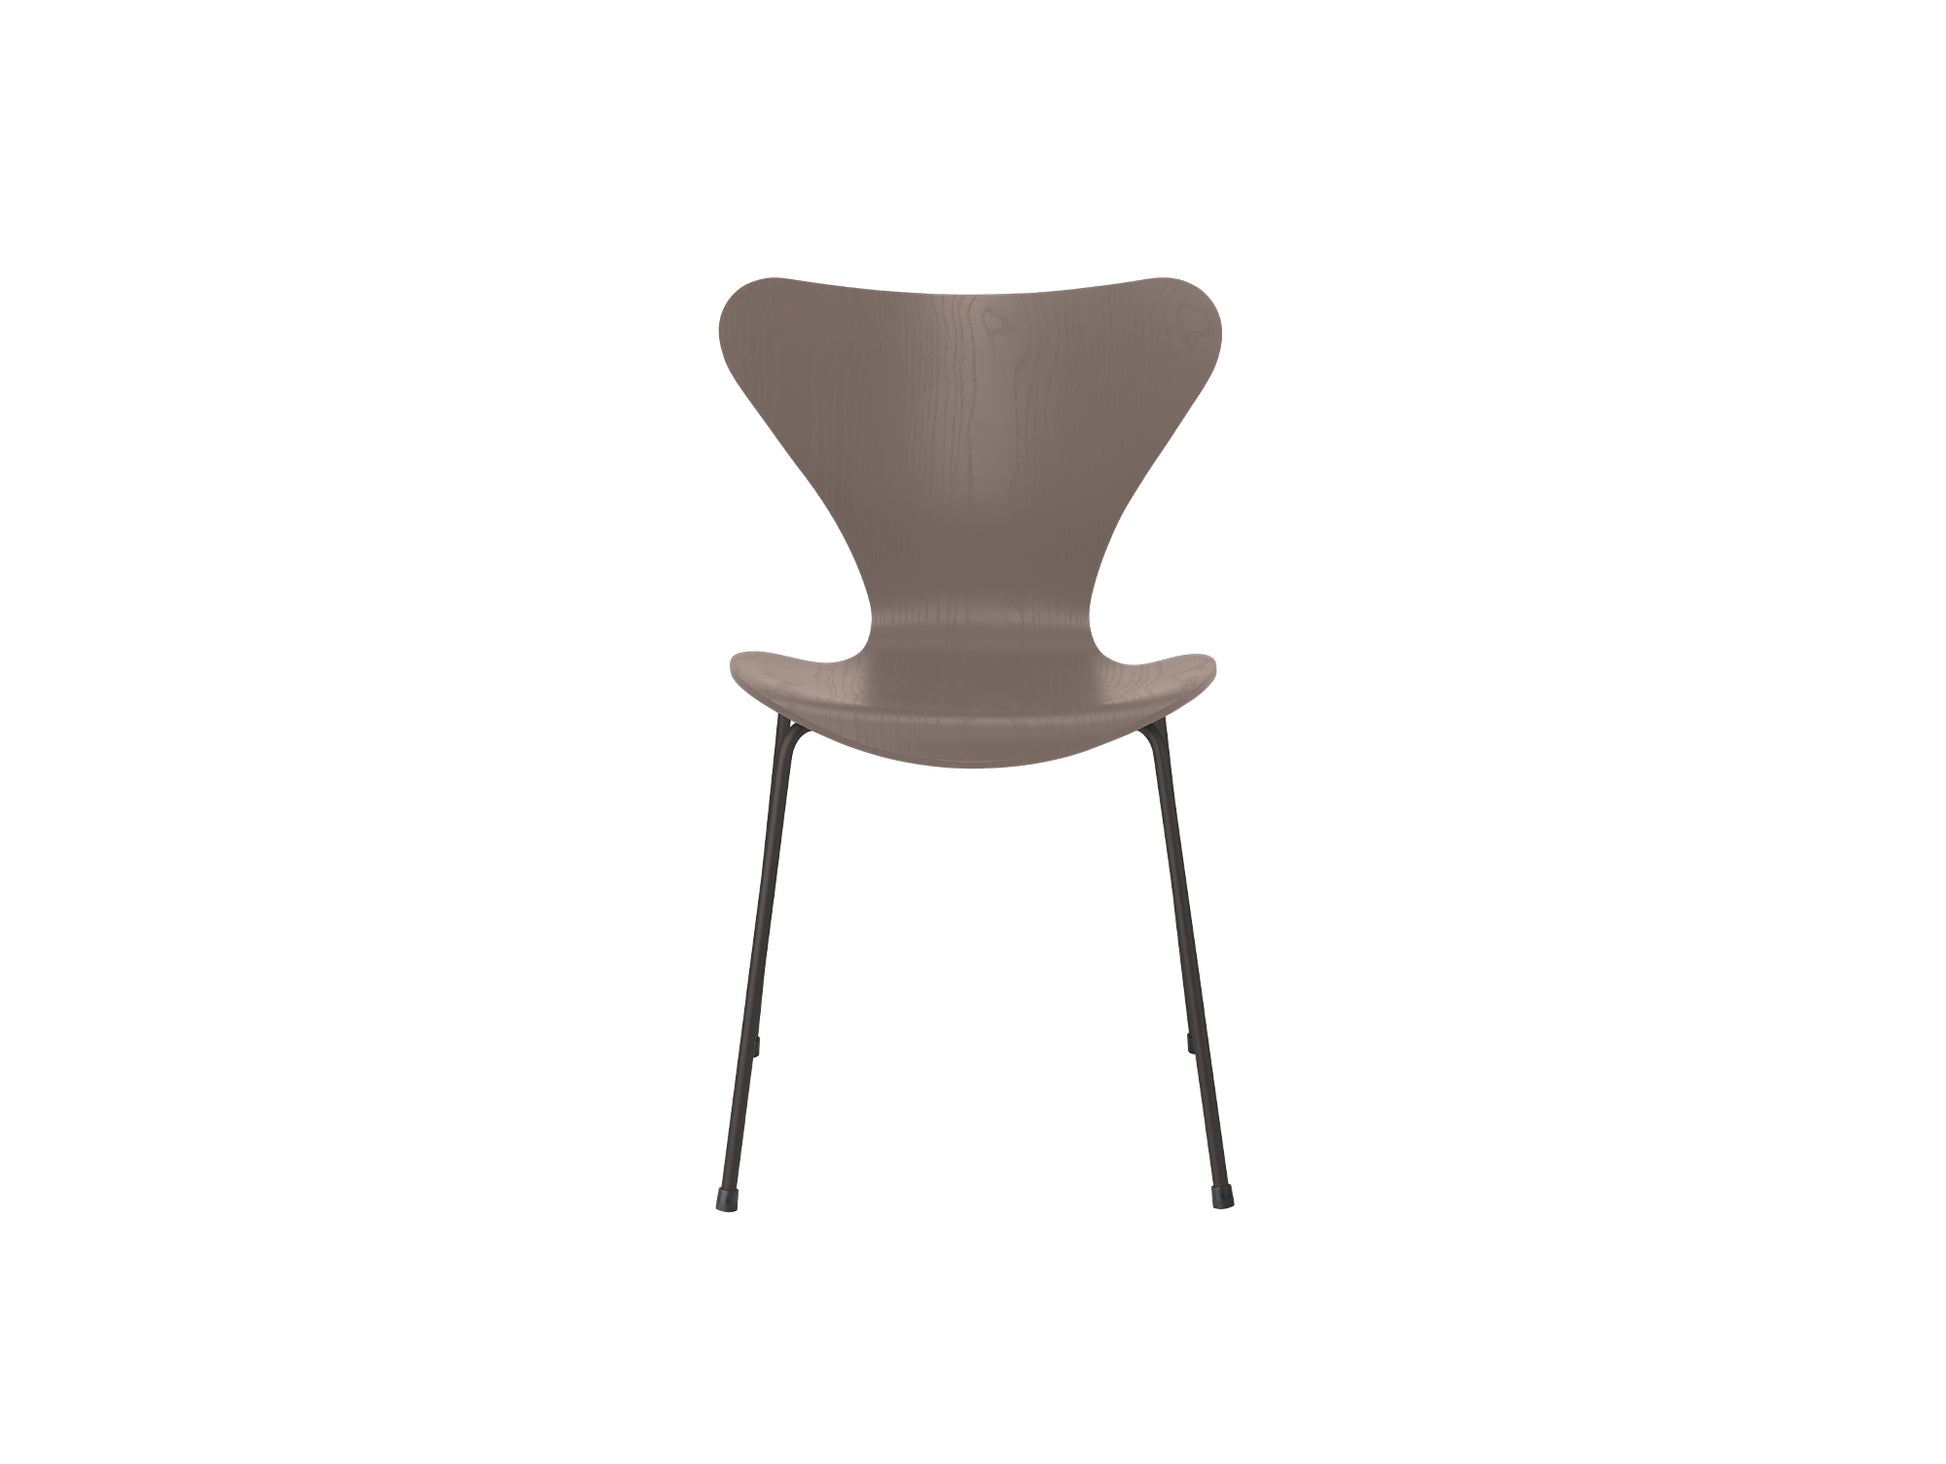 Series 7™ 3107 Dining Chair by Fritz Hansen - Deep Clay Coloured Ash Veneer Shell / Warm Graphite Steel